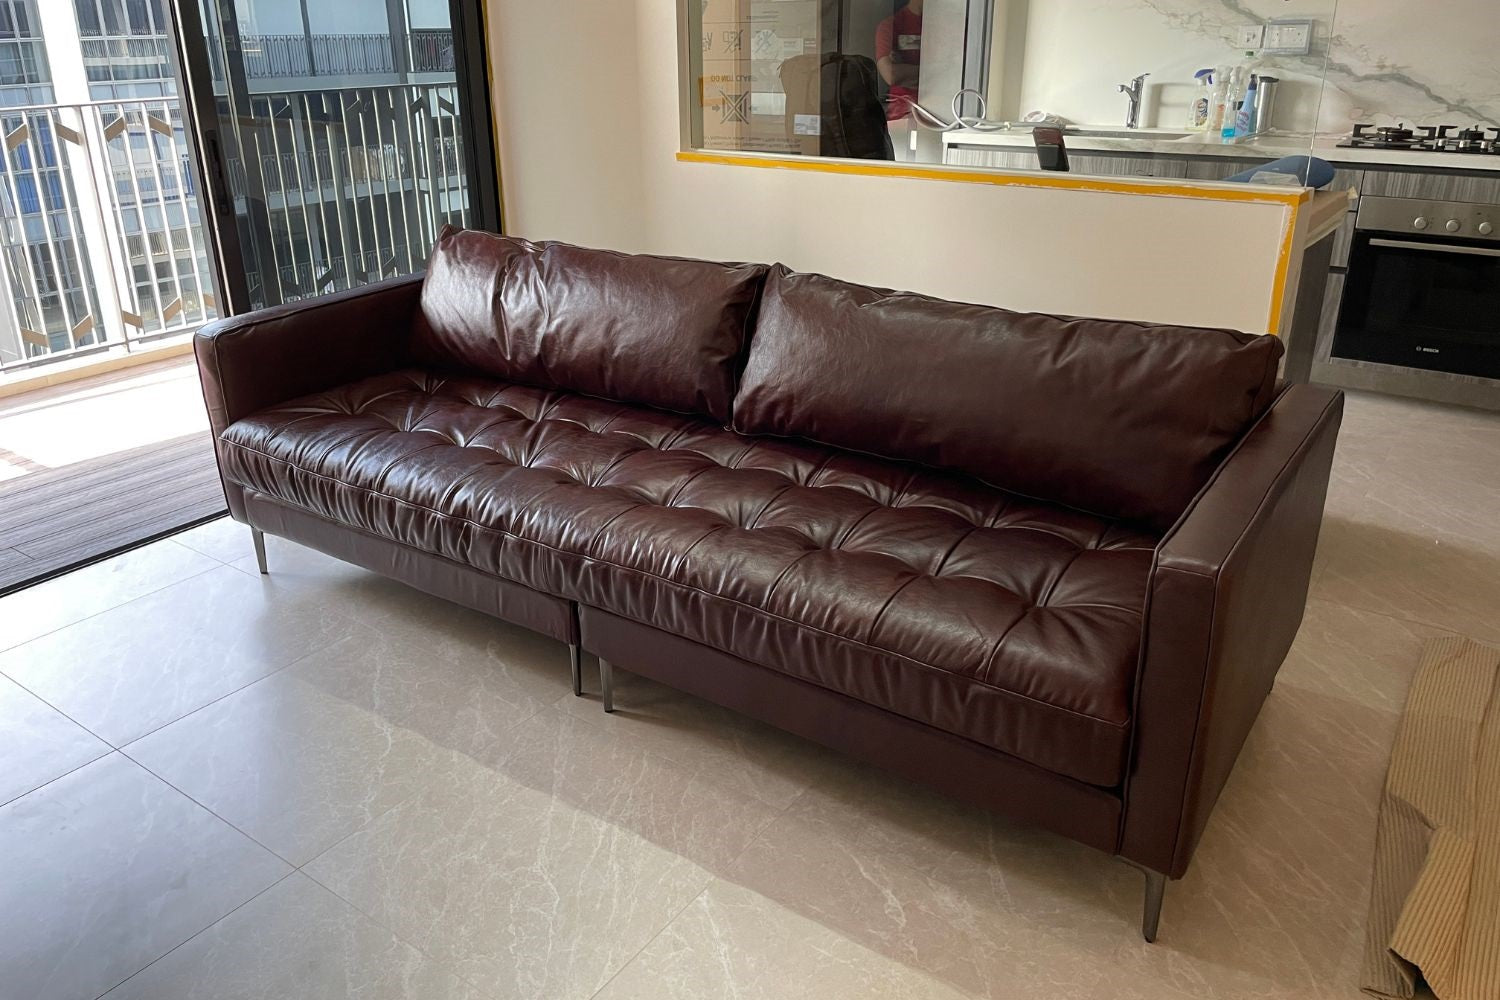 Castle 240cm dark brown full leather sofa in customer's home